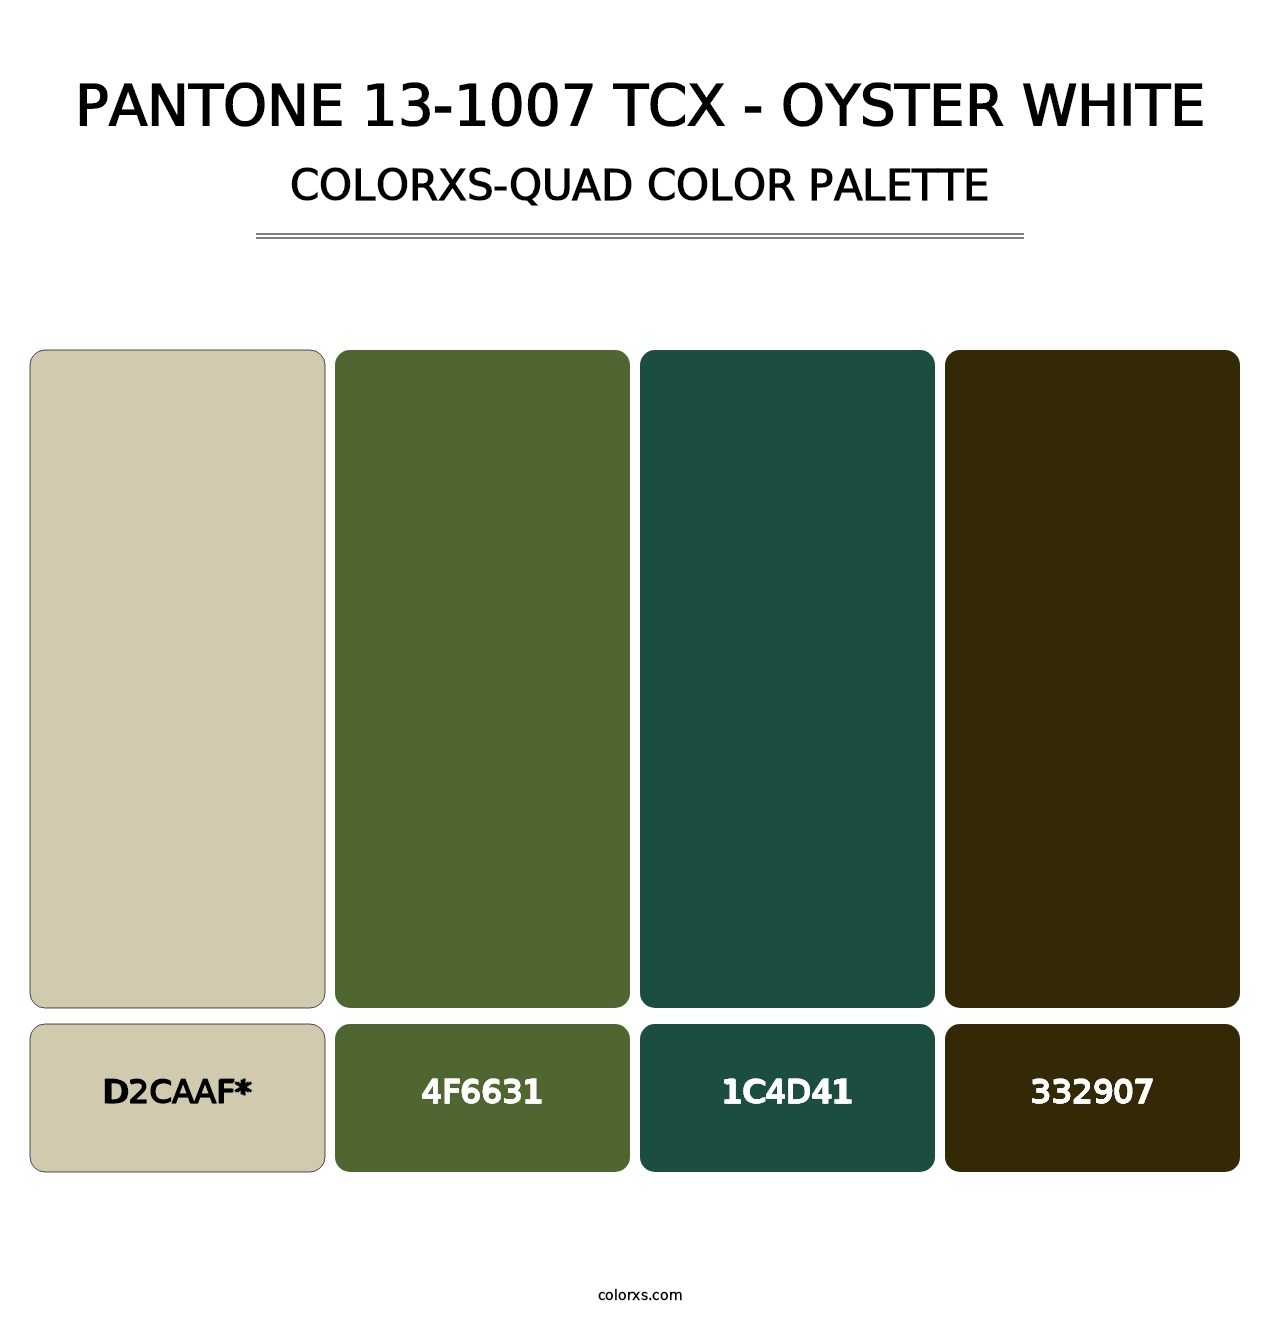 PANTONE 13-1007 TCX - Oyster White - Colorxs Quad Palette